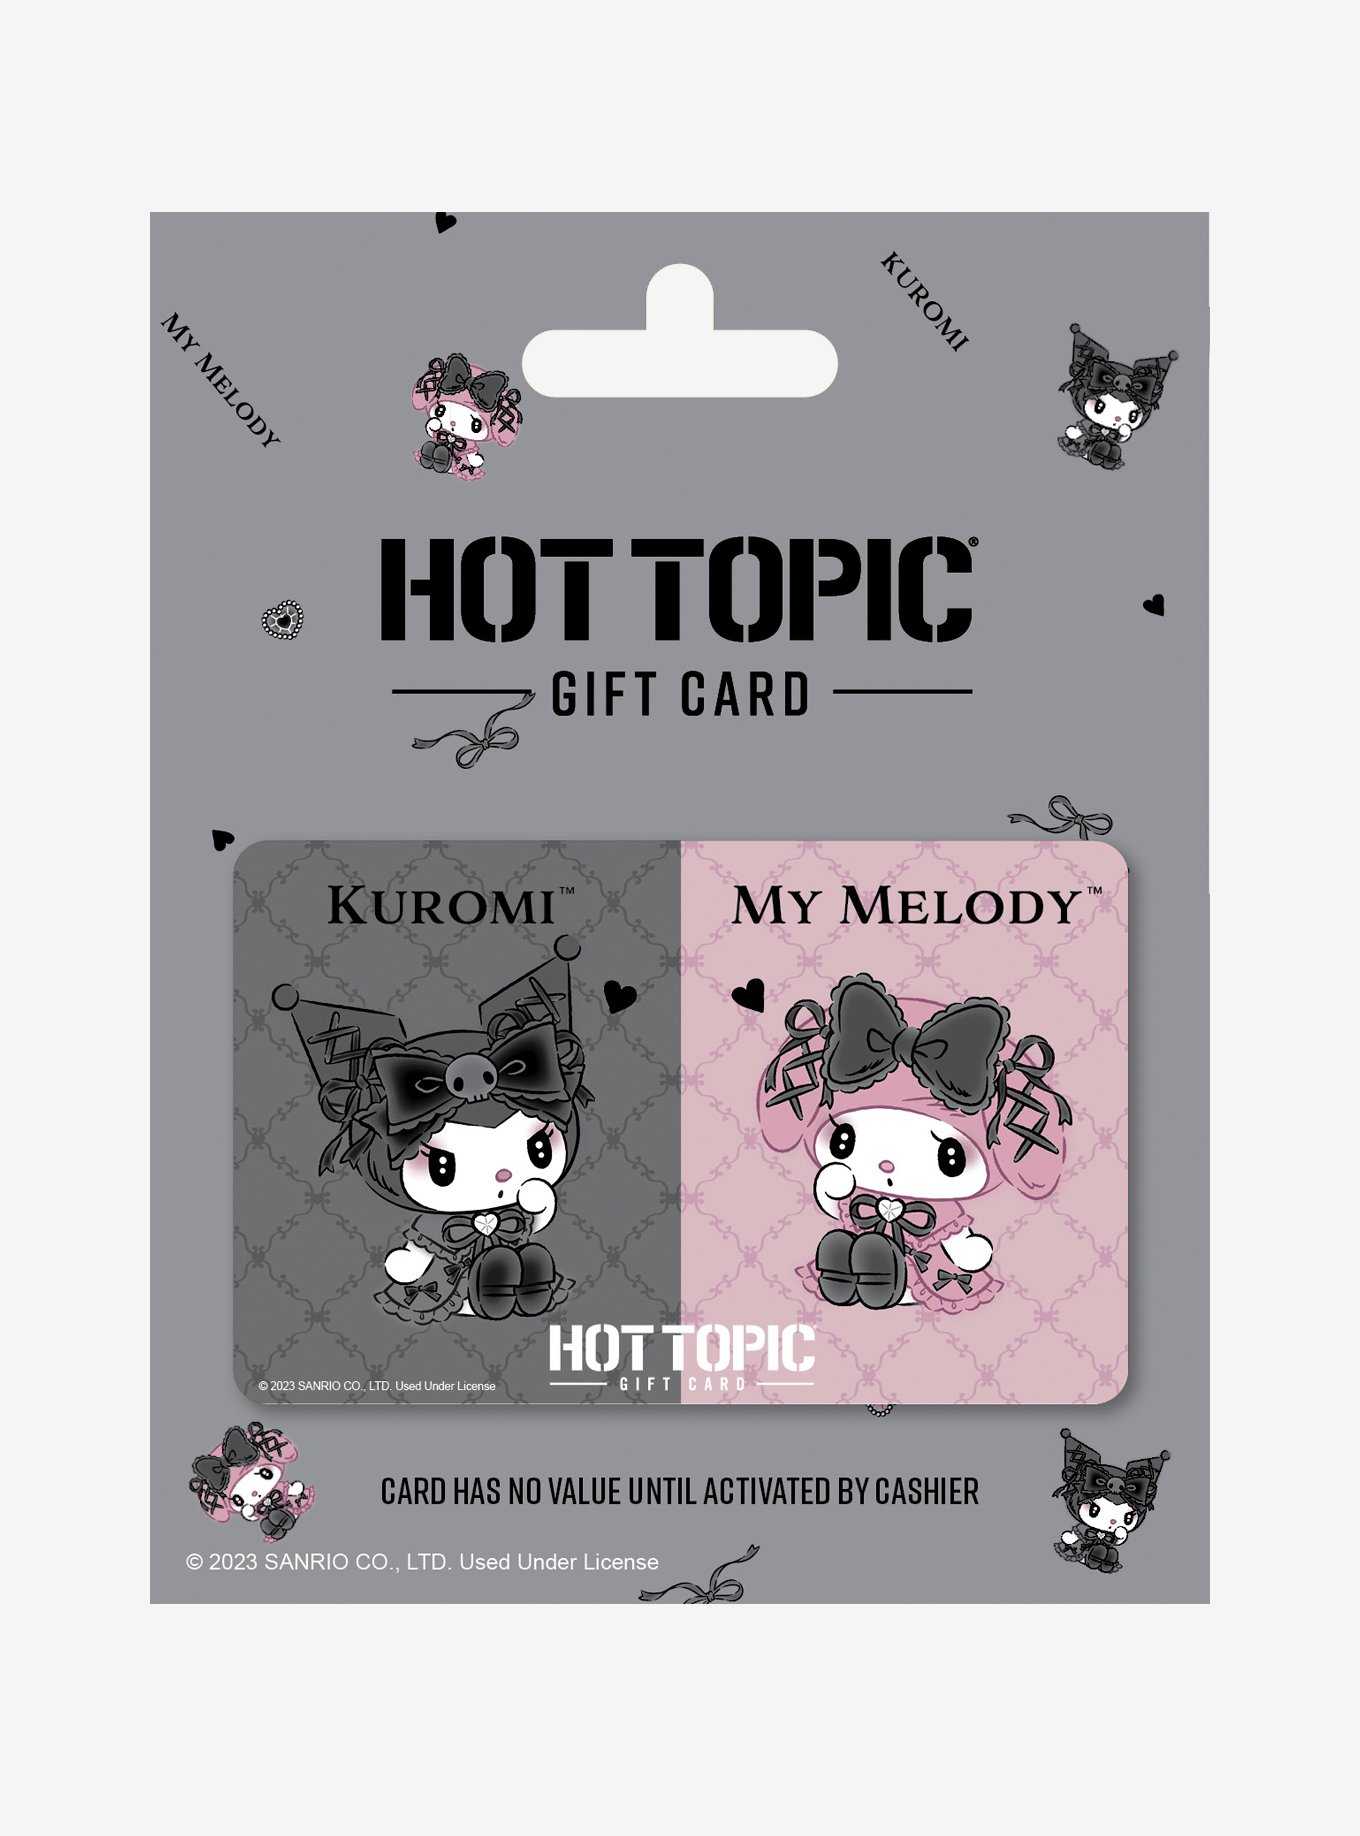 Hot Topic $50 Gift Card [Digital] Hot Topic DDP $50 - Best Buy